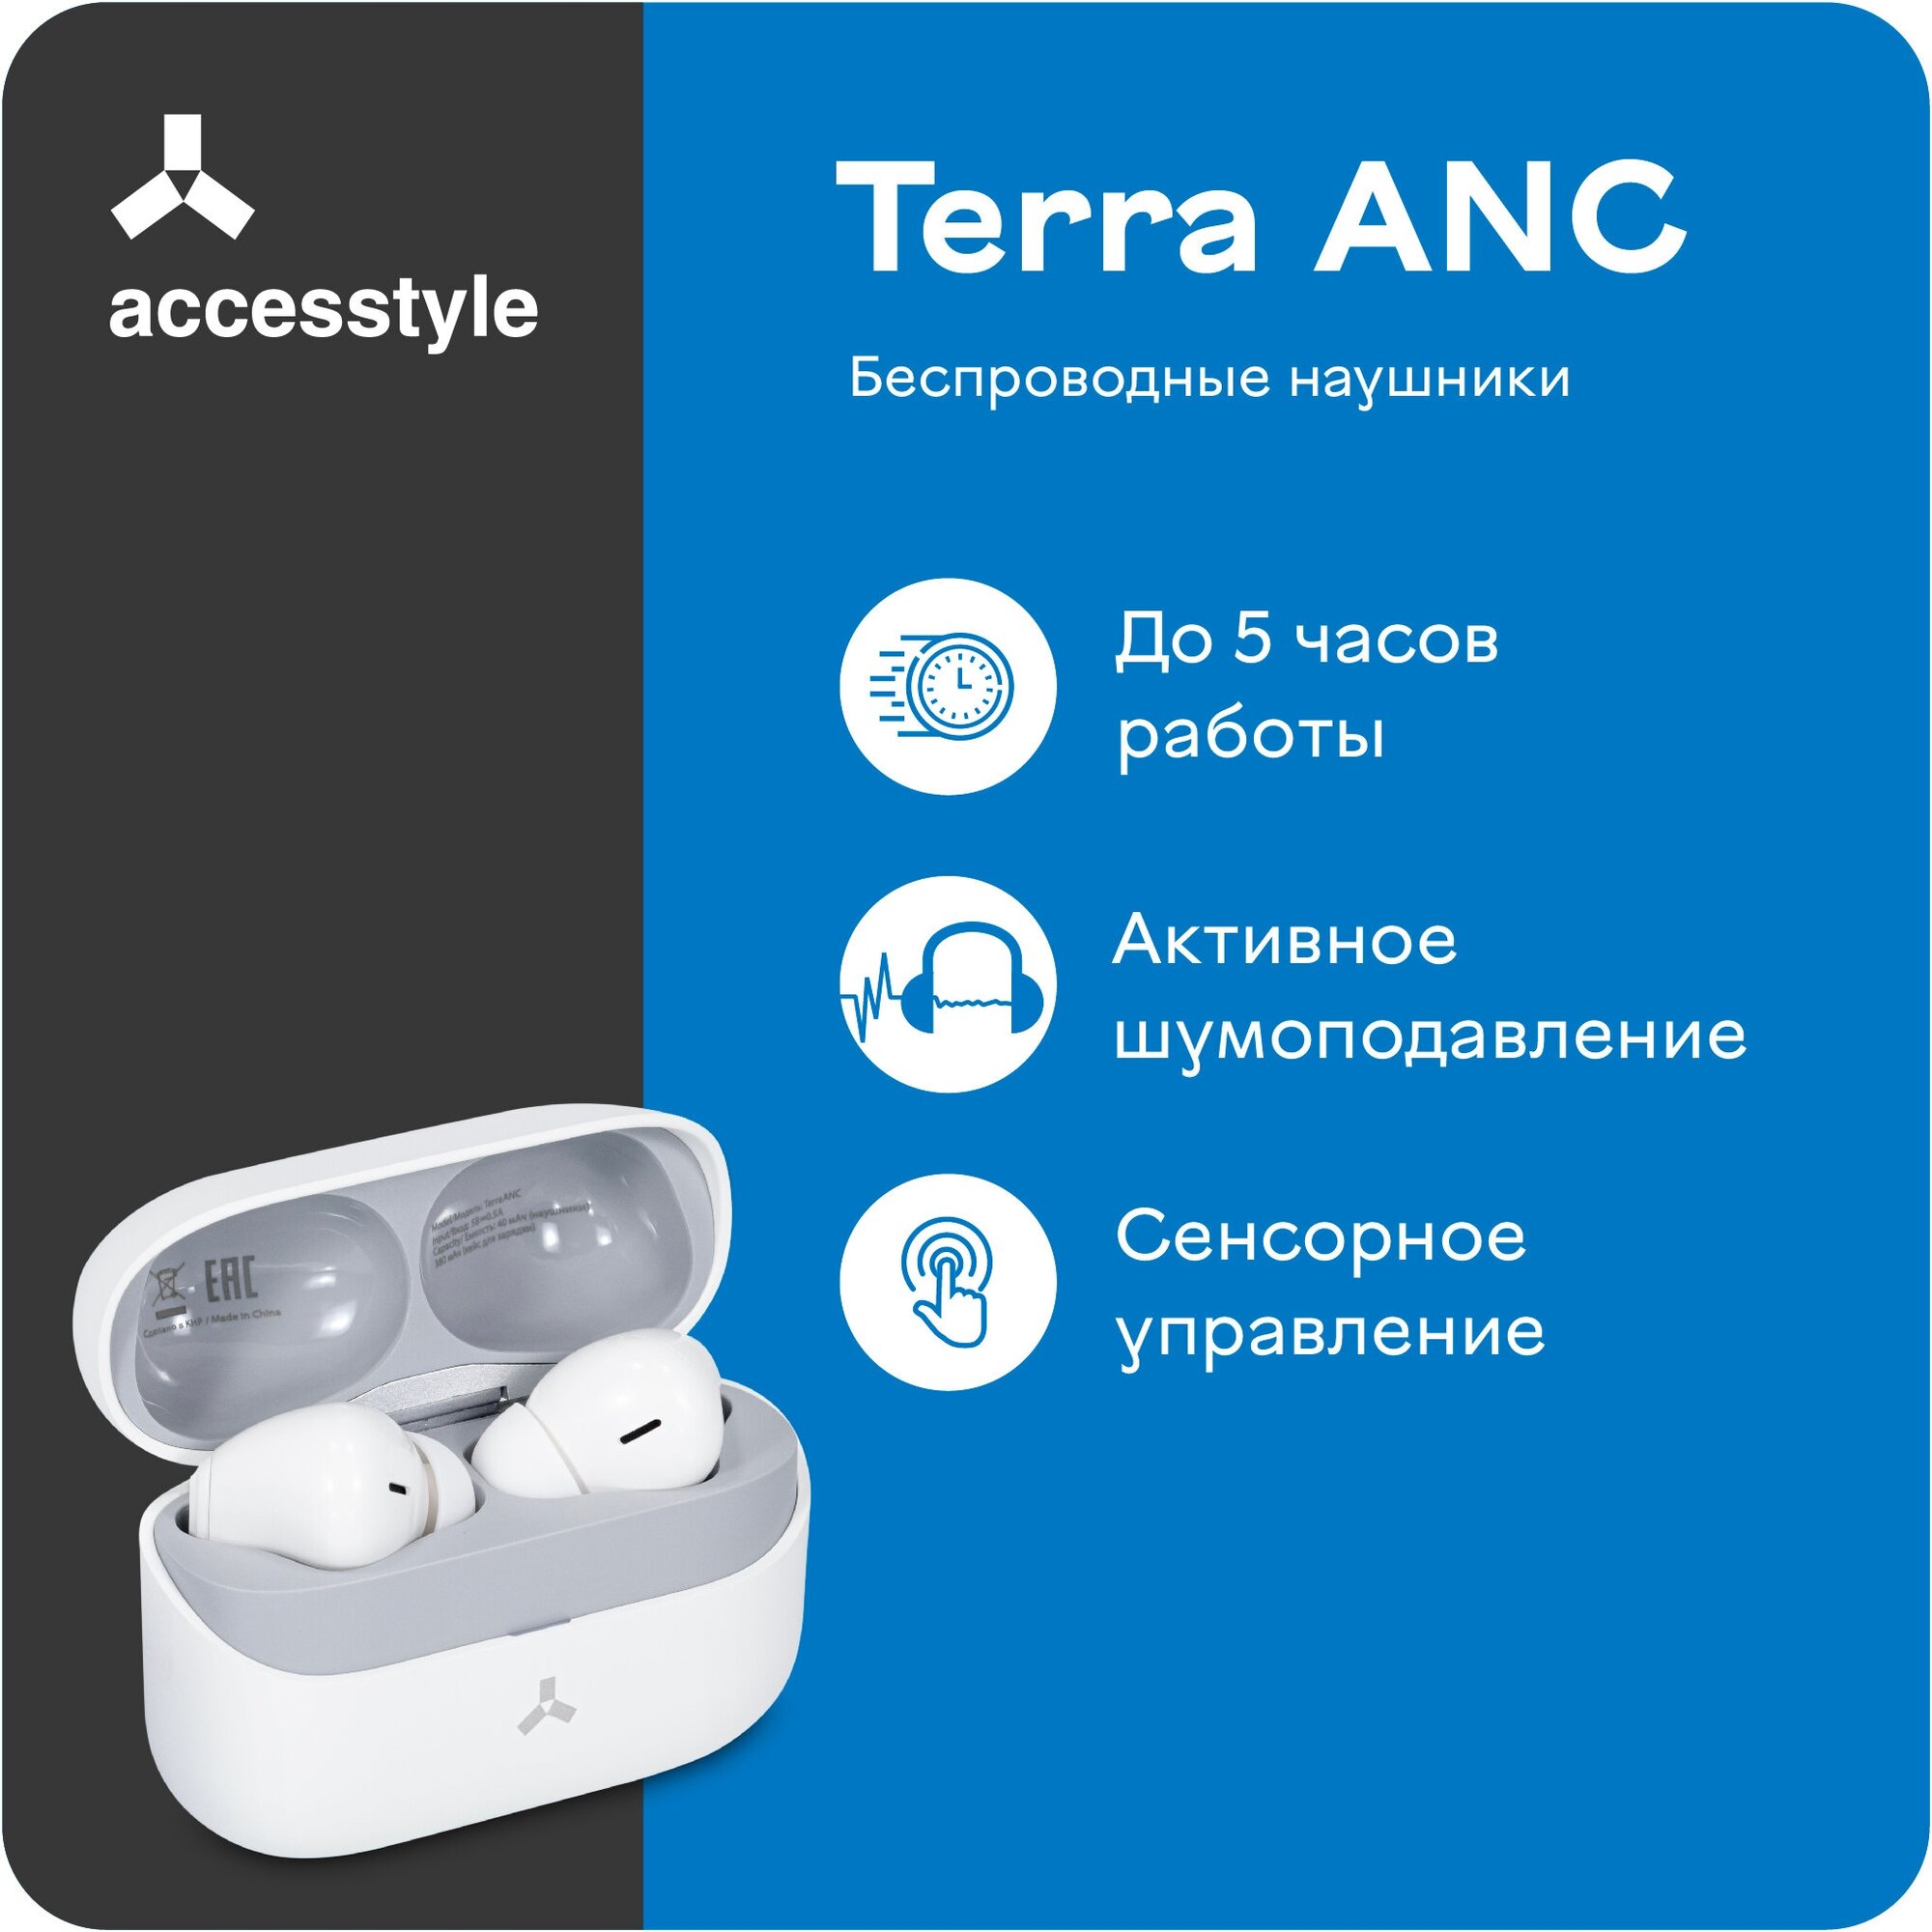 Беспроводные наушники Accesstyle Terra ANC, white